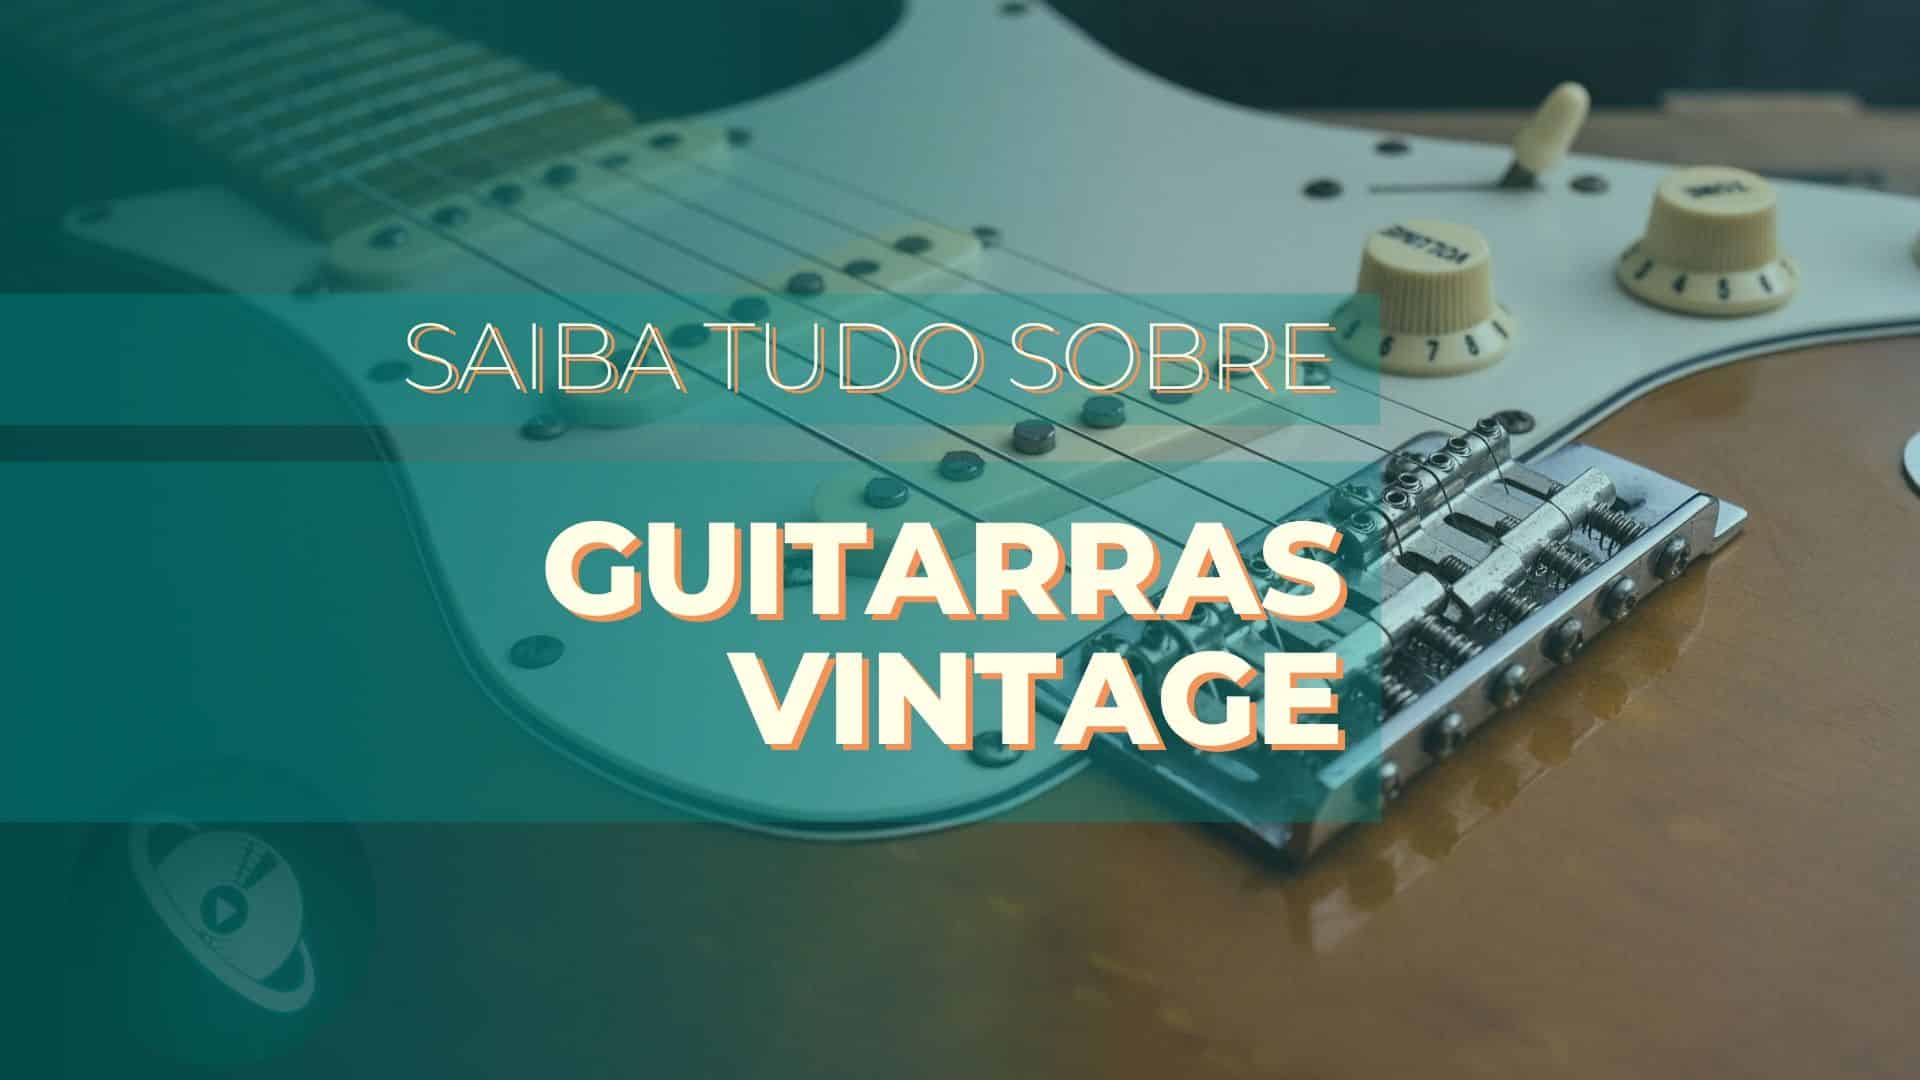 Saiba tudo sobre Guitarras Vintage